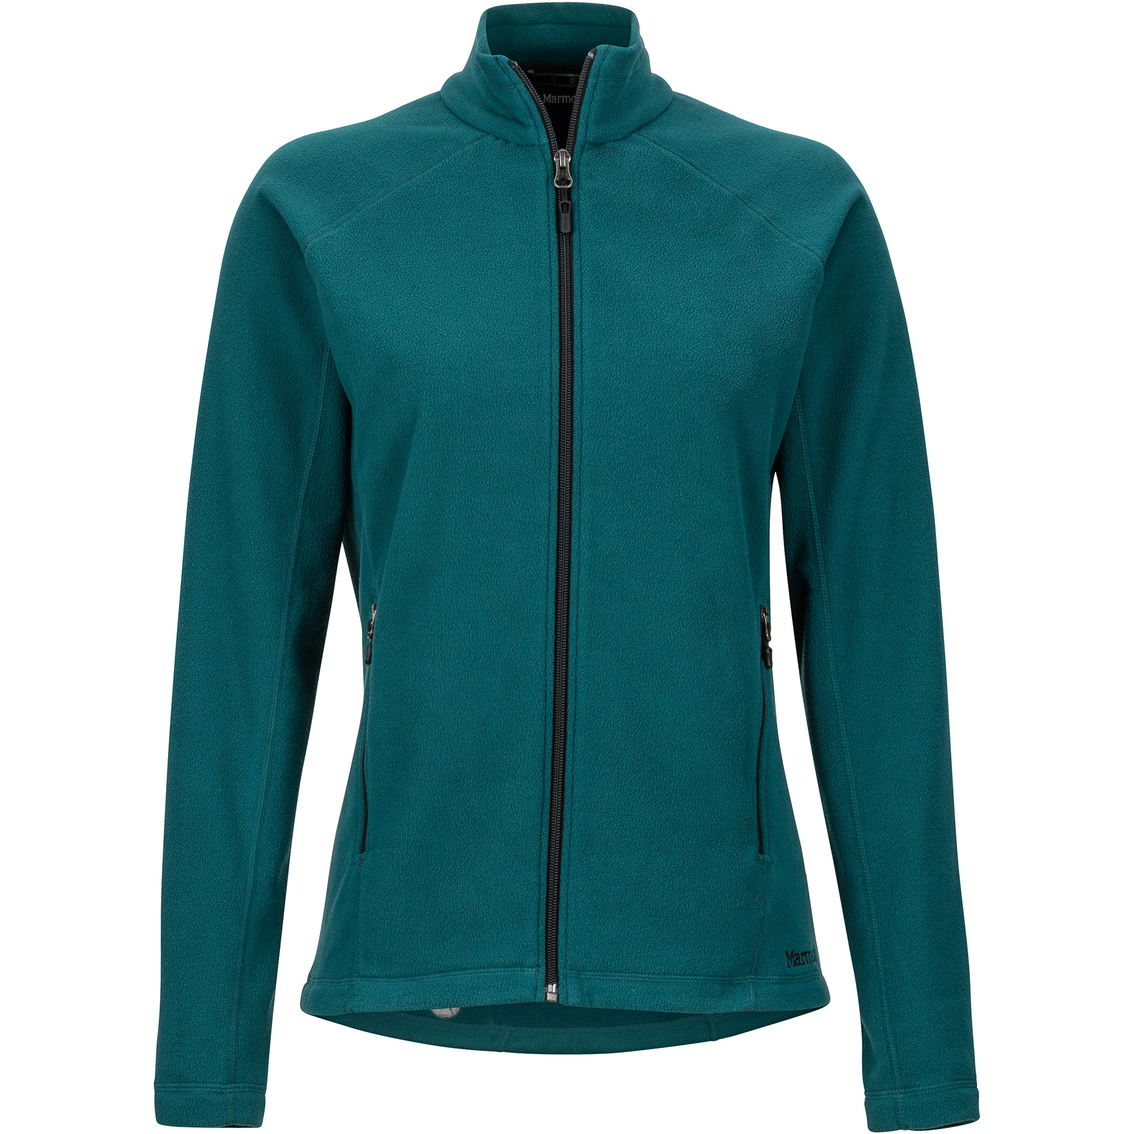 Marmot Rocklin Full Zip Jacket | Jackets | Clothing & Accessories ...